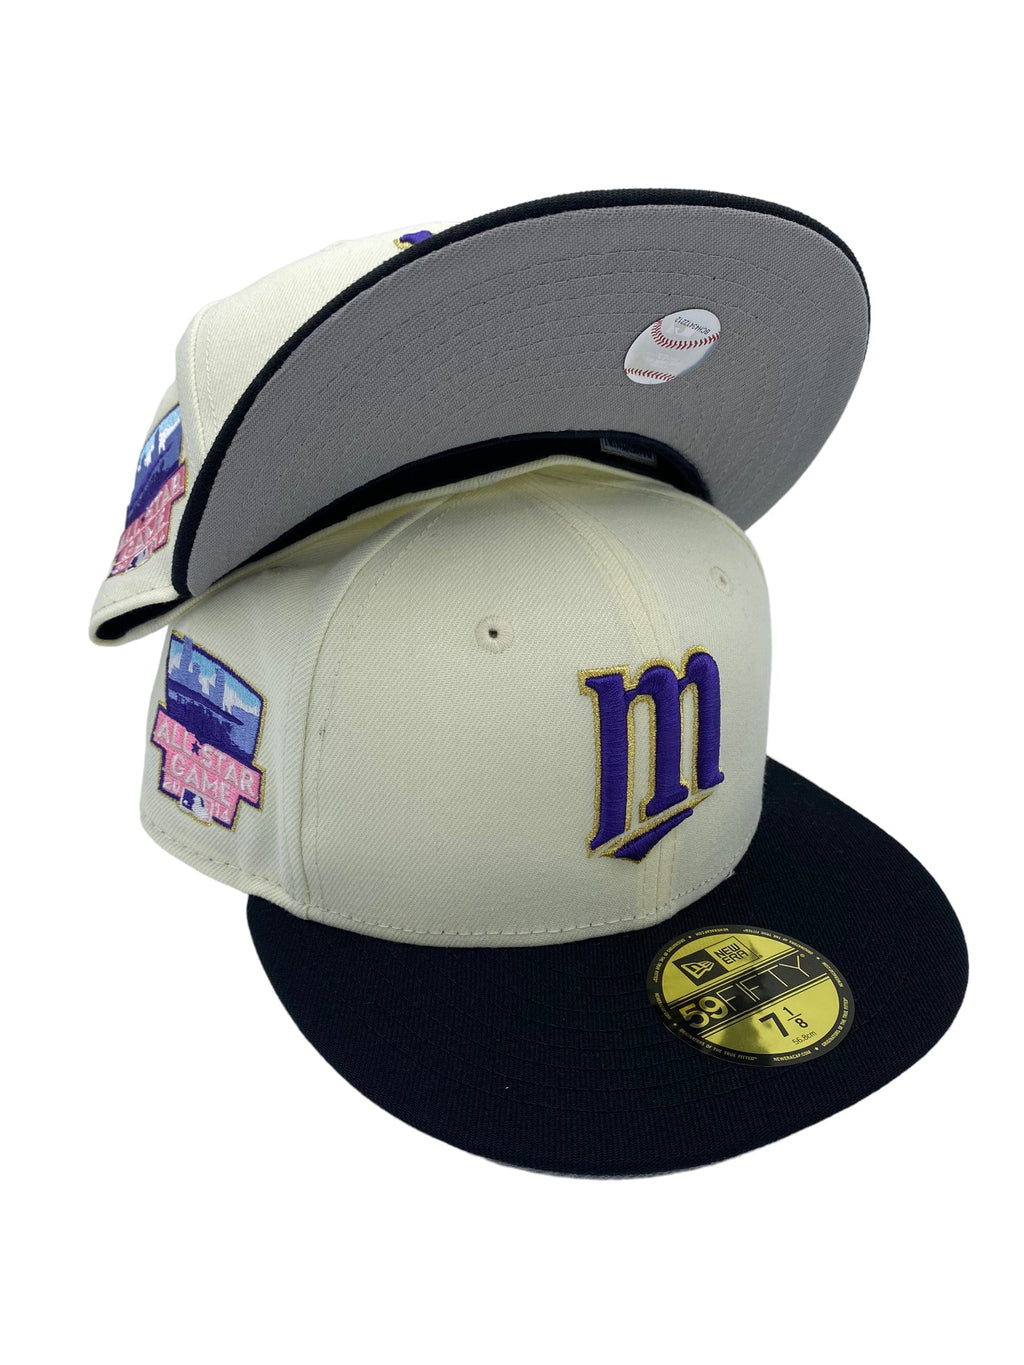 Minnesota Twins Purple Prince Snapback Hat & Jersey size XL